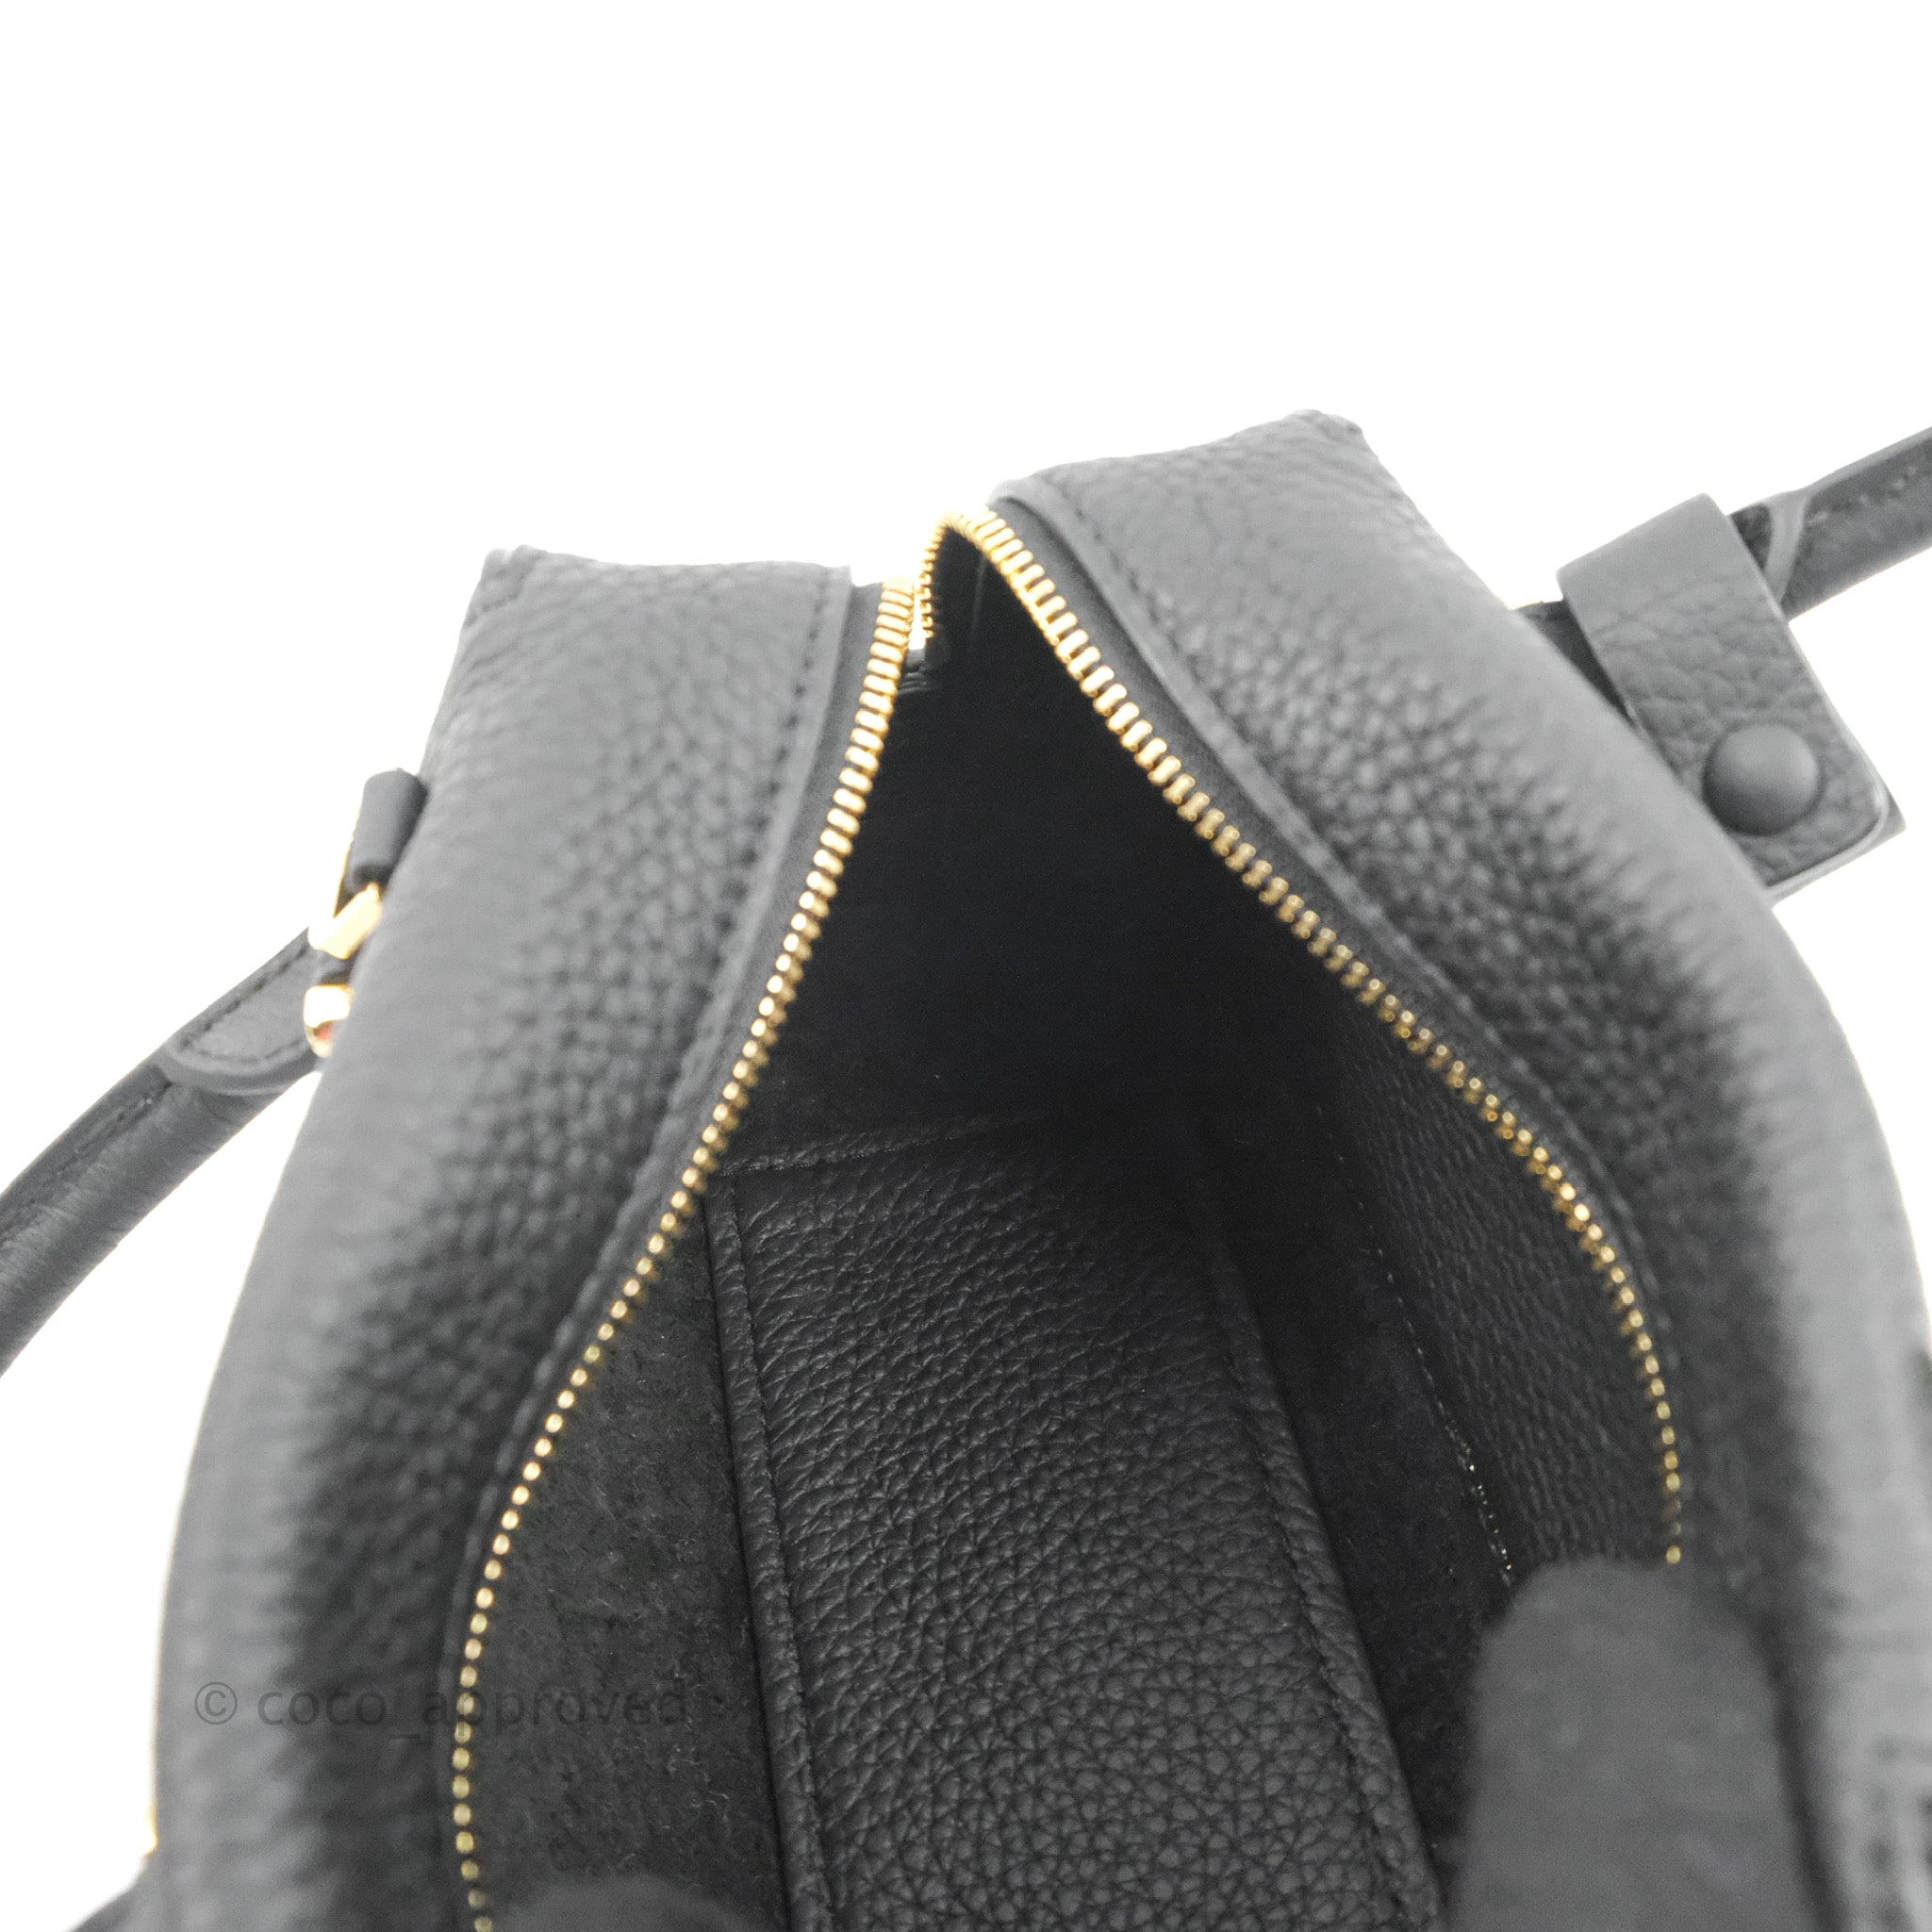 DELVAUX Pin Cool Box NANO black shoulder bag Great condition Authentic